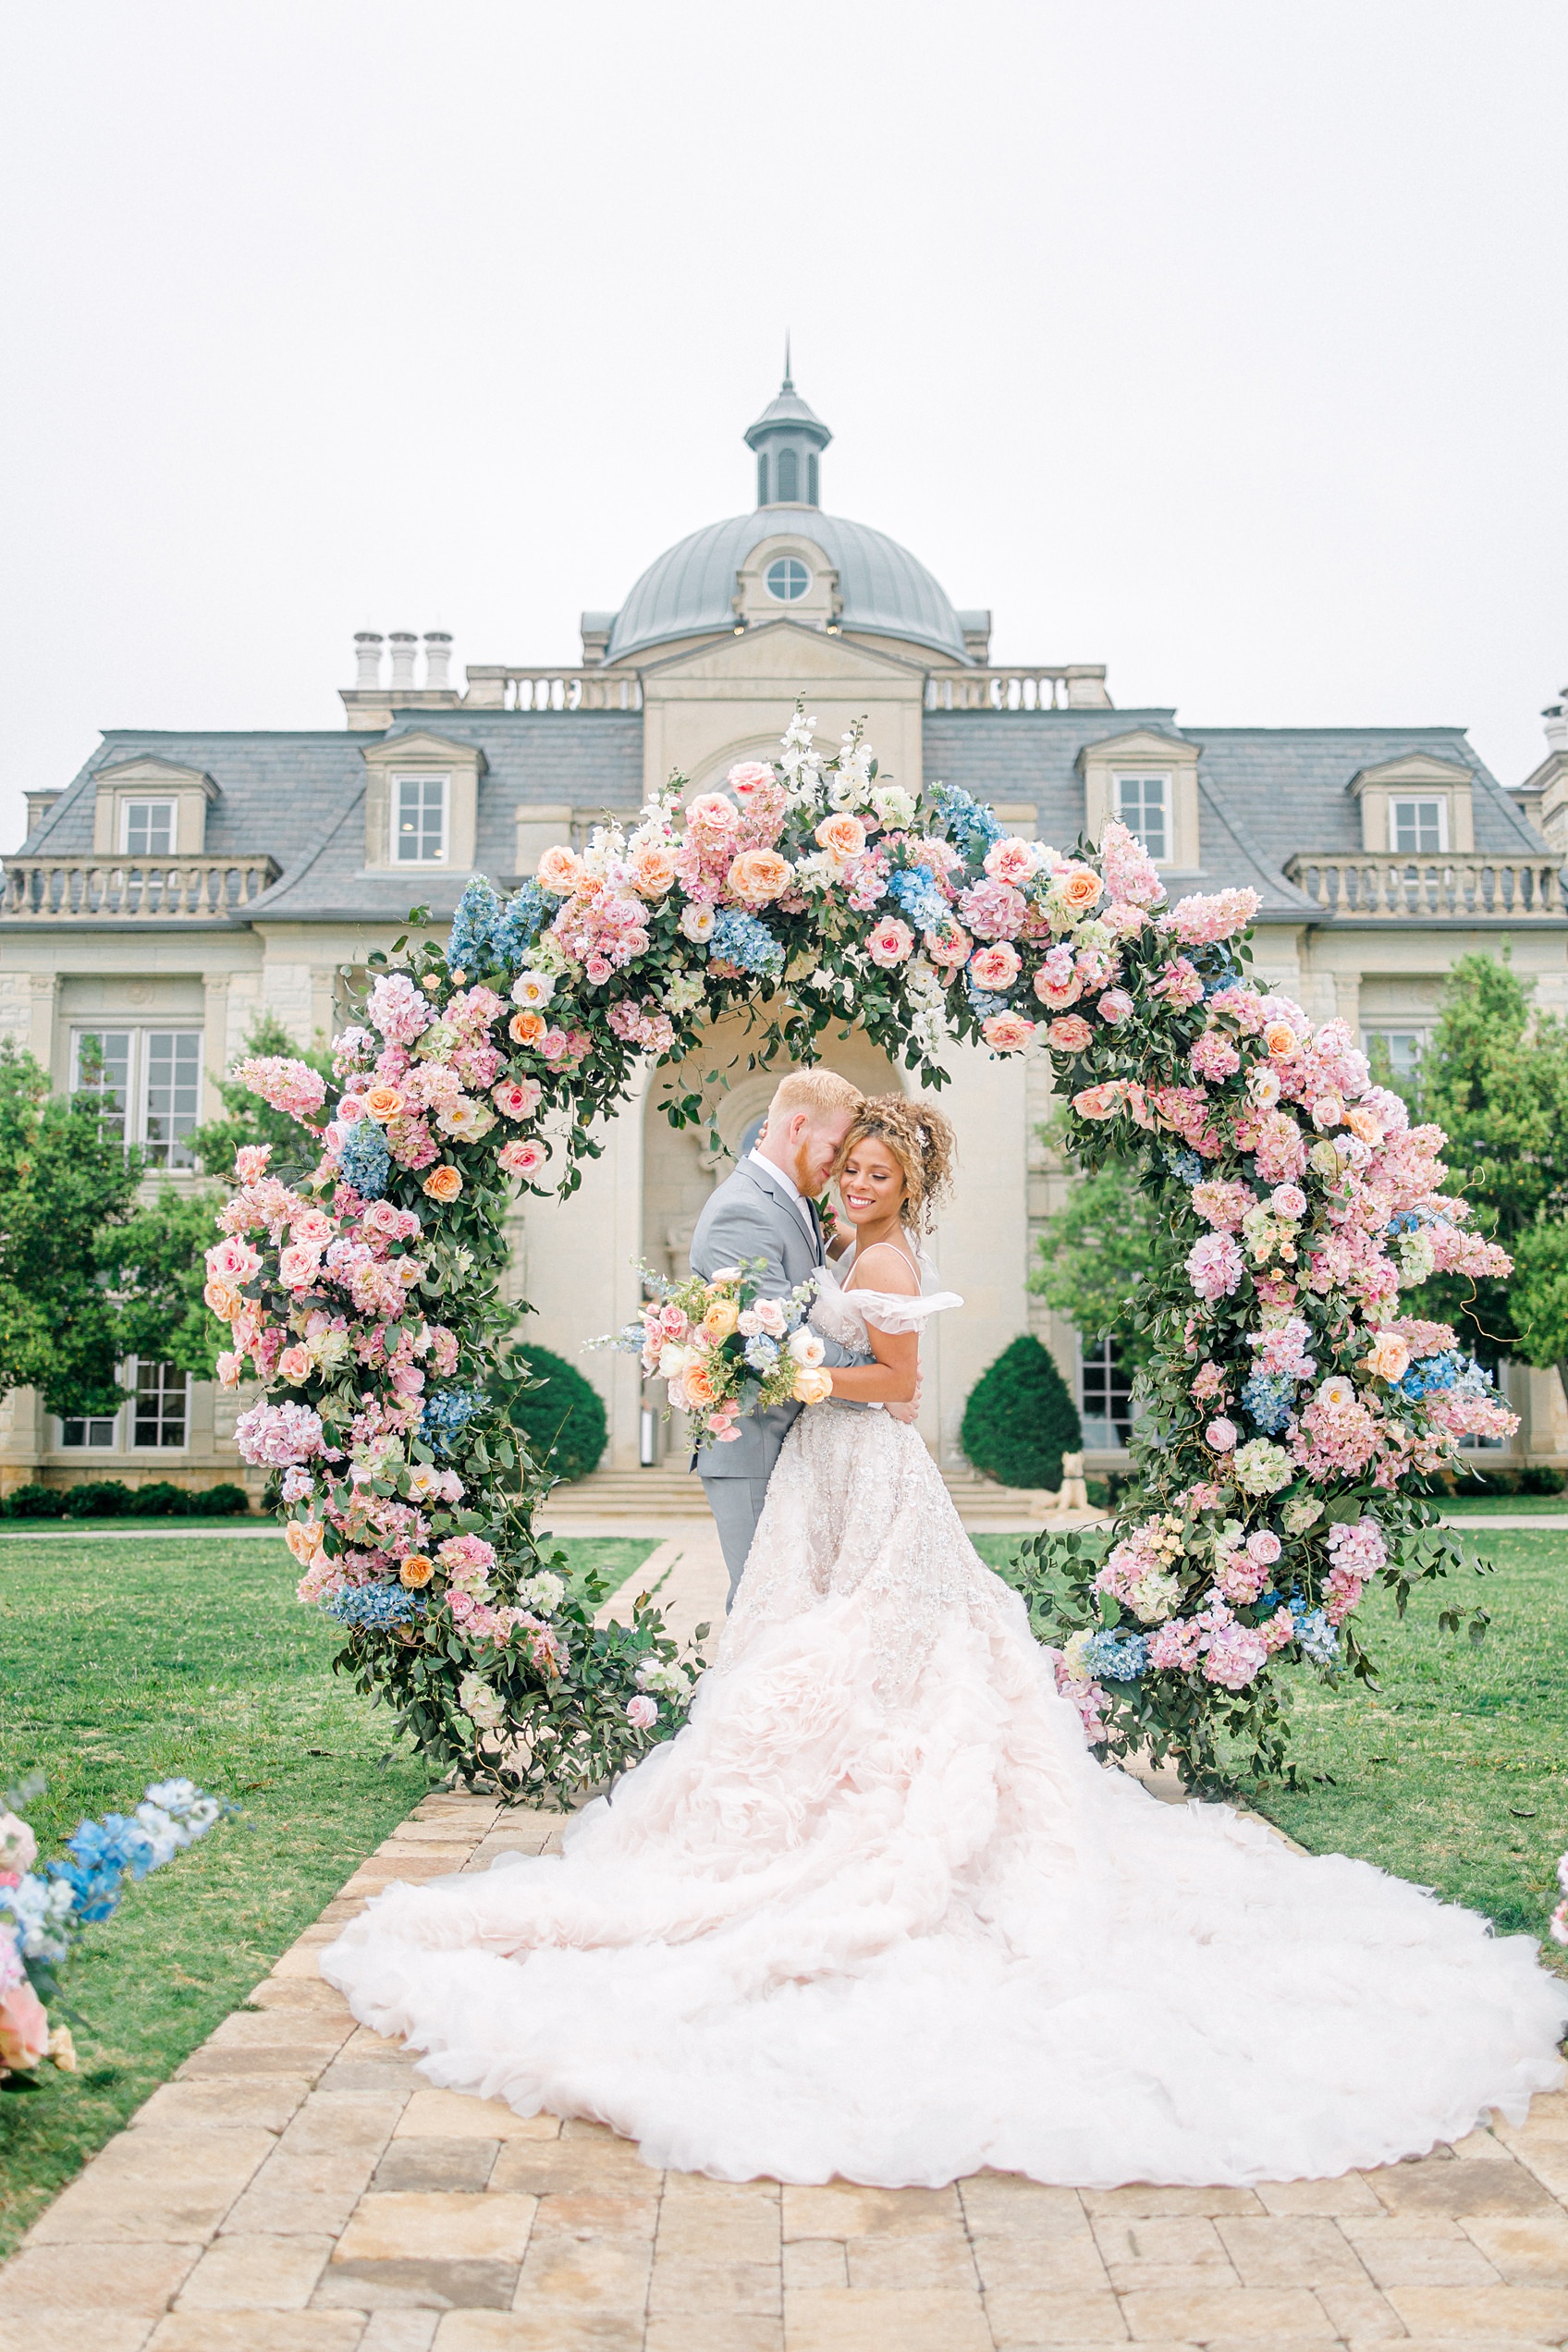 Bridgerton Themed wedding inspiration at The Olana in Dallas Texas by Allison Jeffers Wedding Photography 0005 1